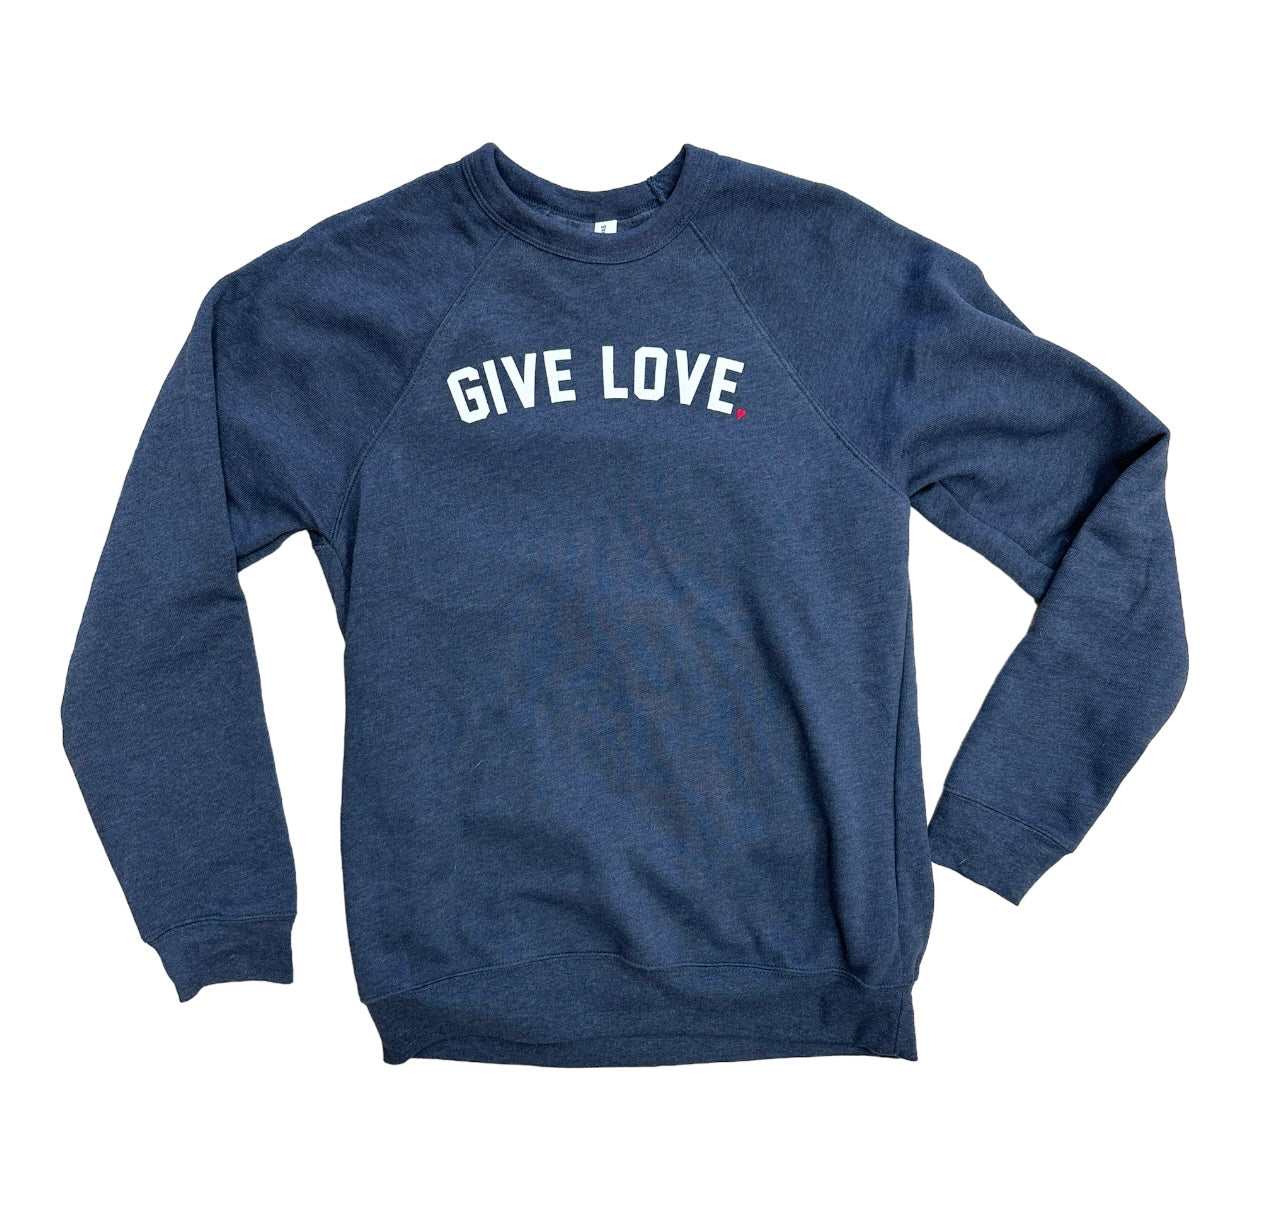 Give Love Sweatshirt - Heather Navy